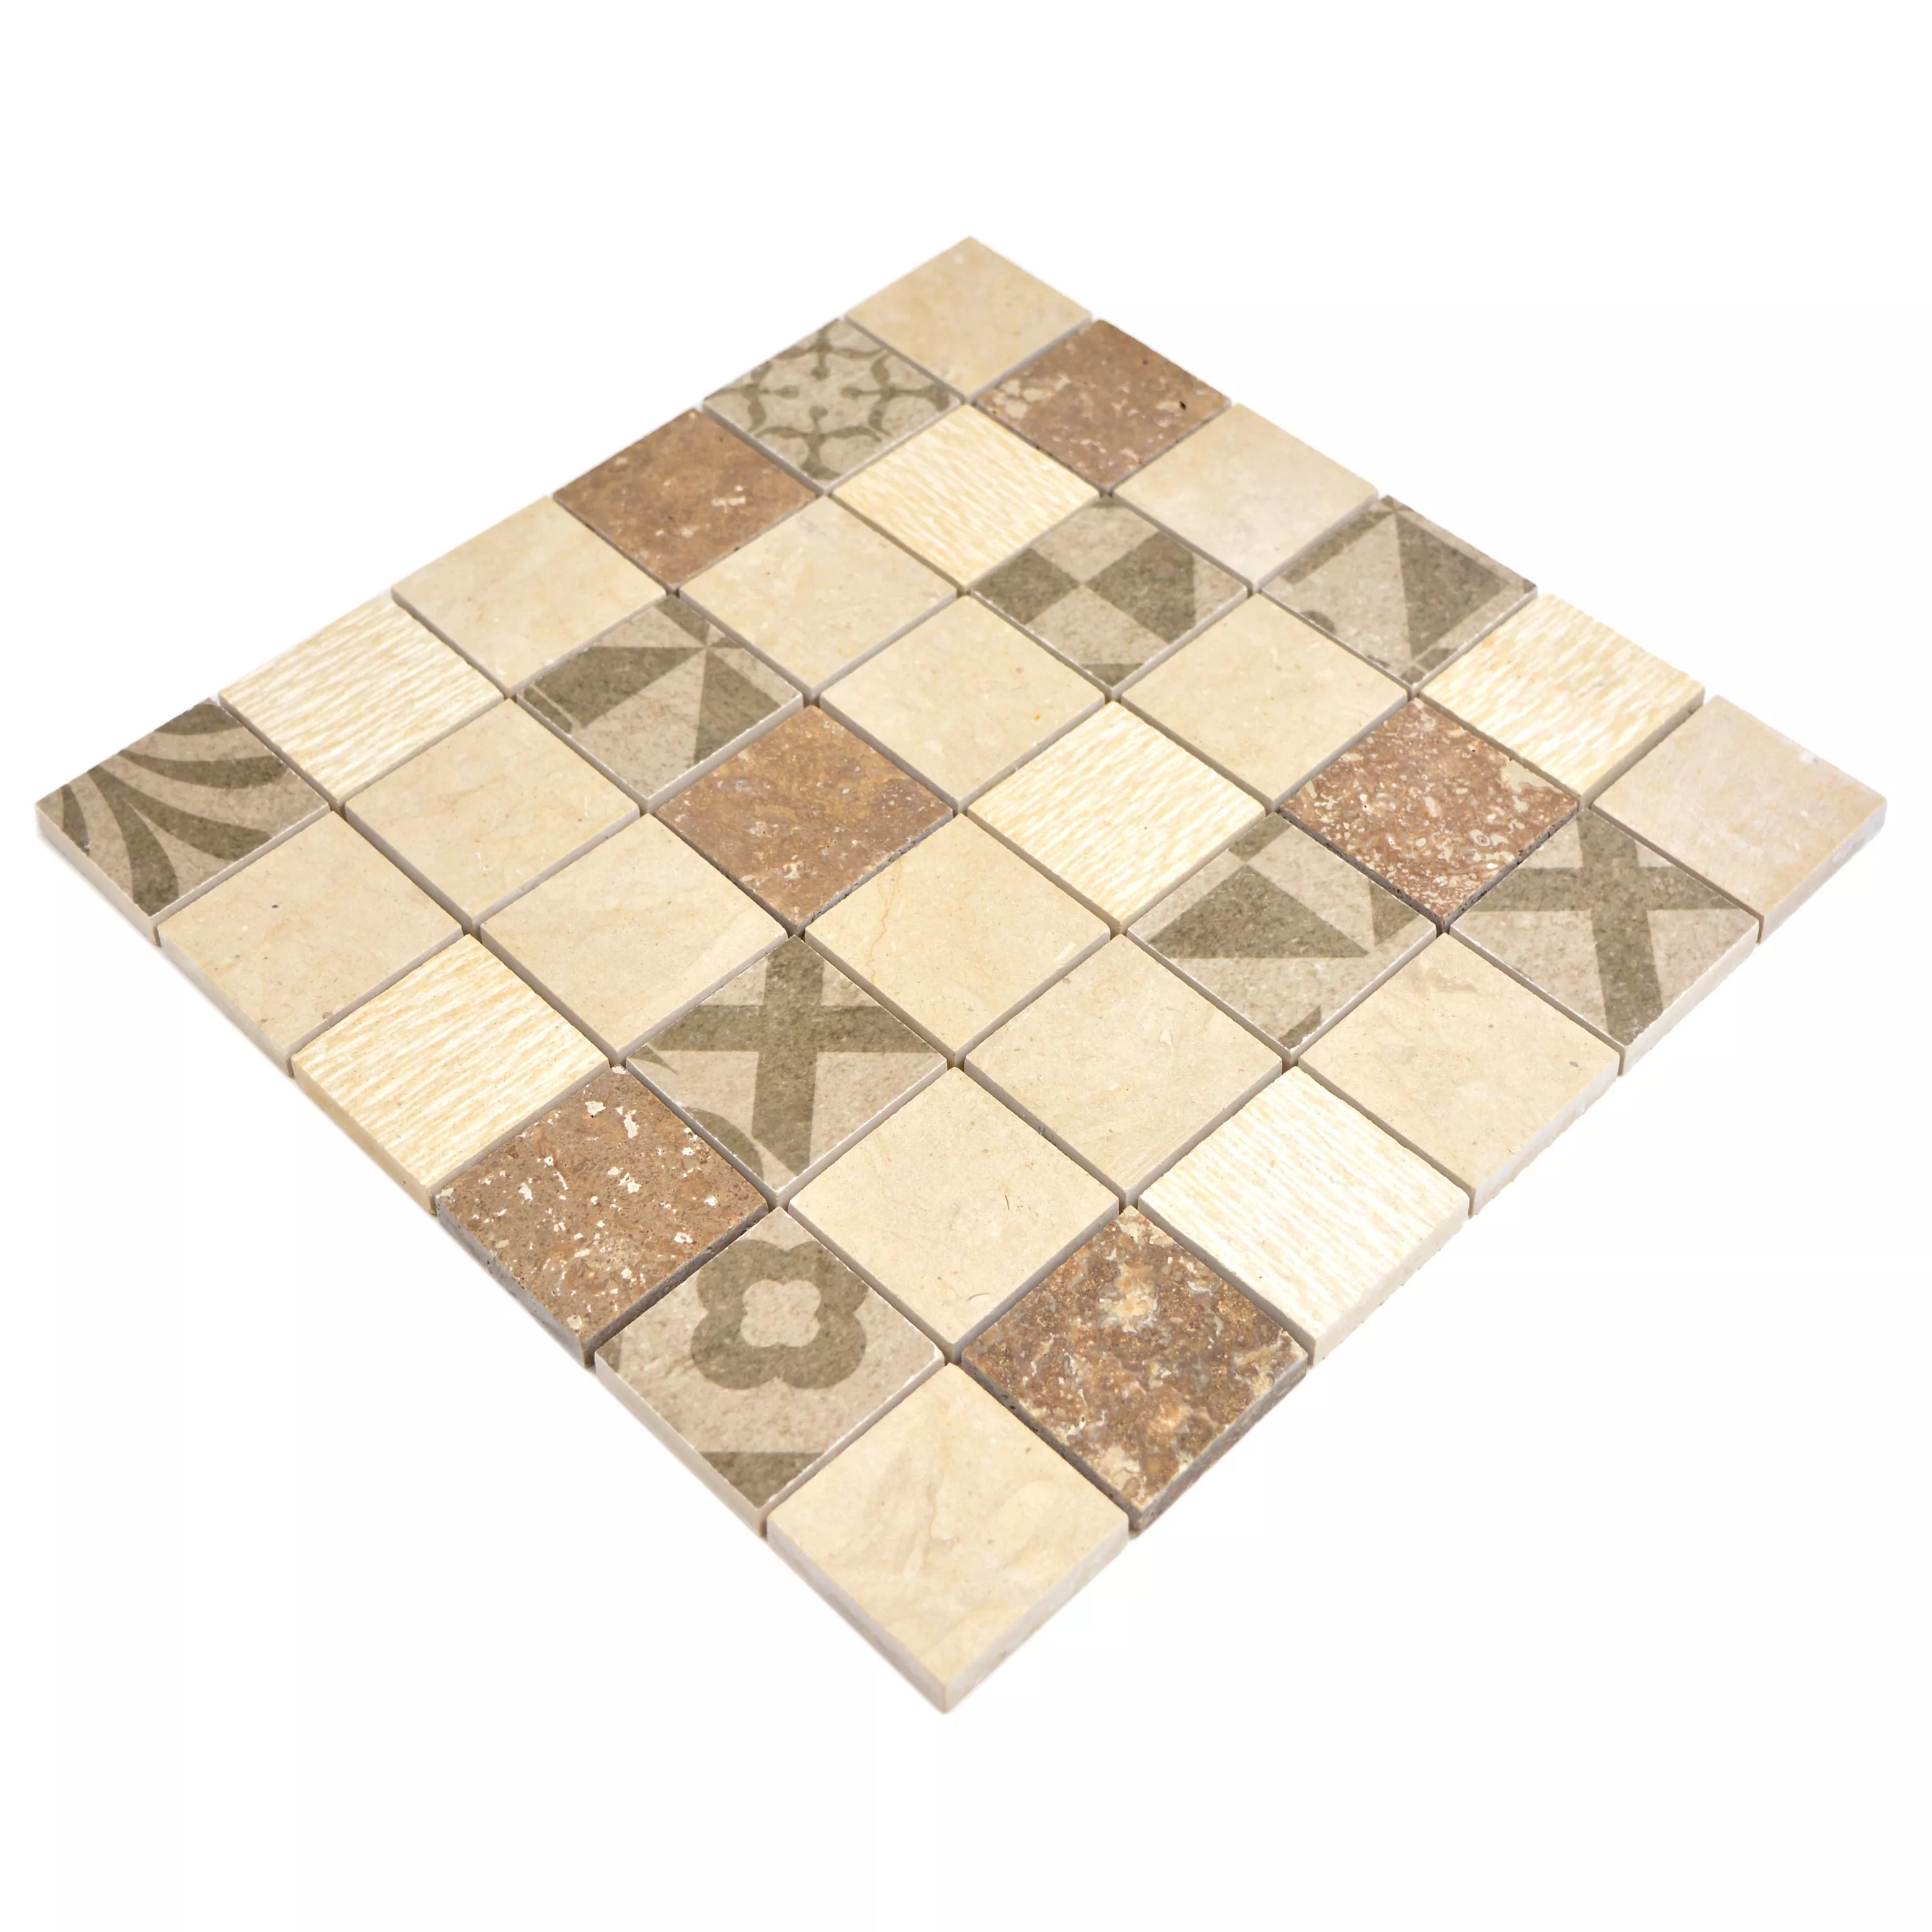 Sample Ceramic Mosaic Tiles Mythos Square Grey Beige Terracotta